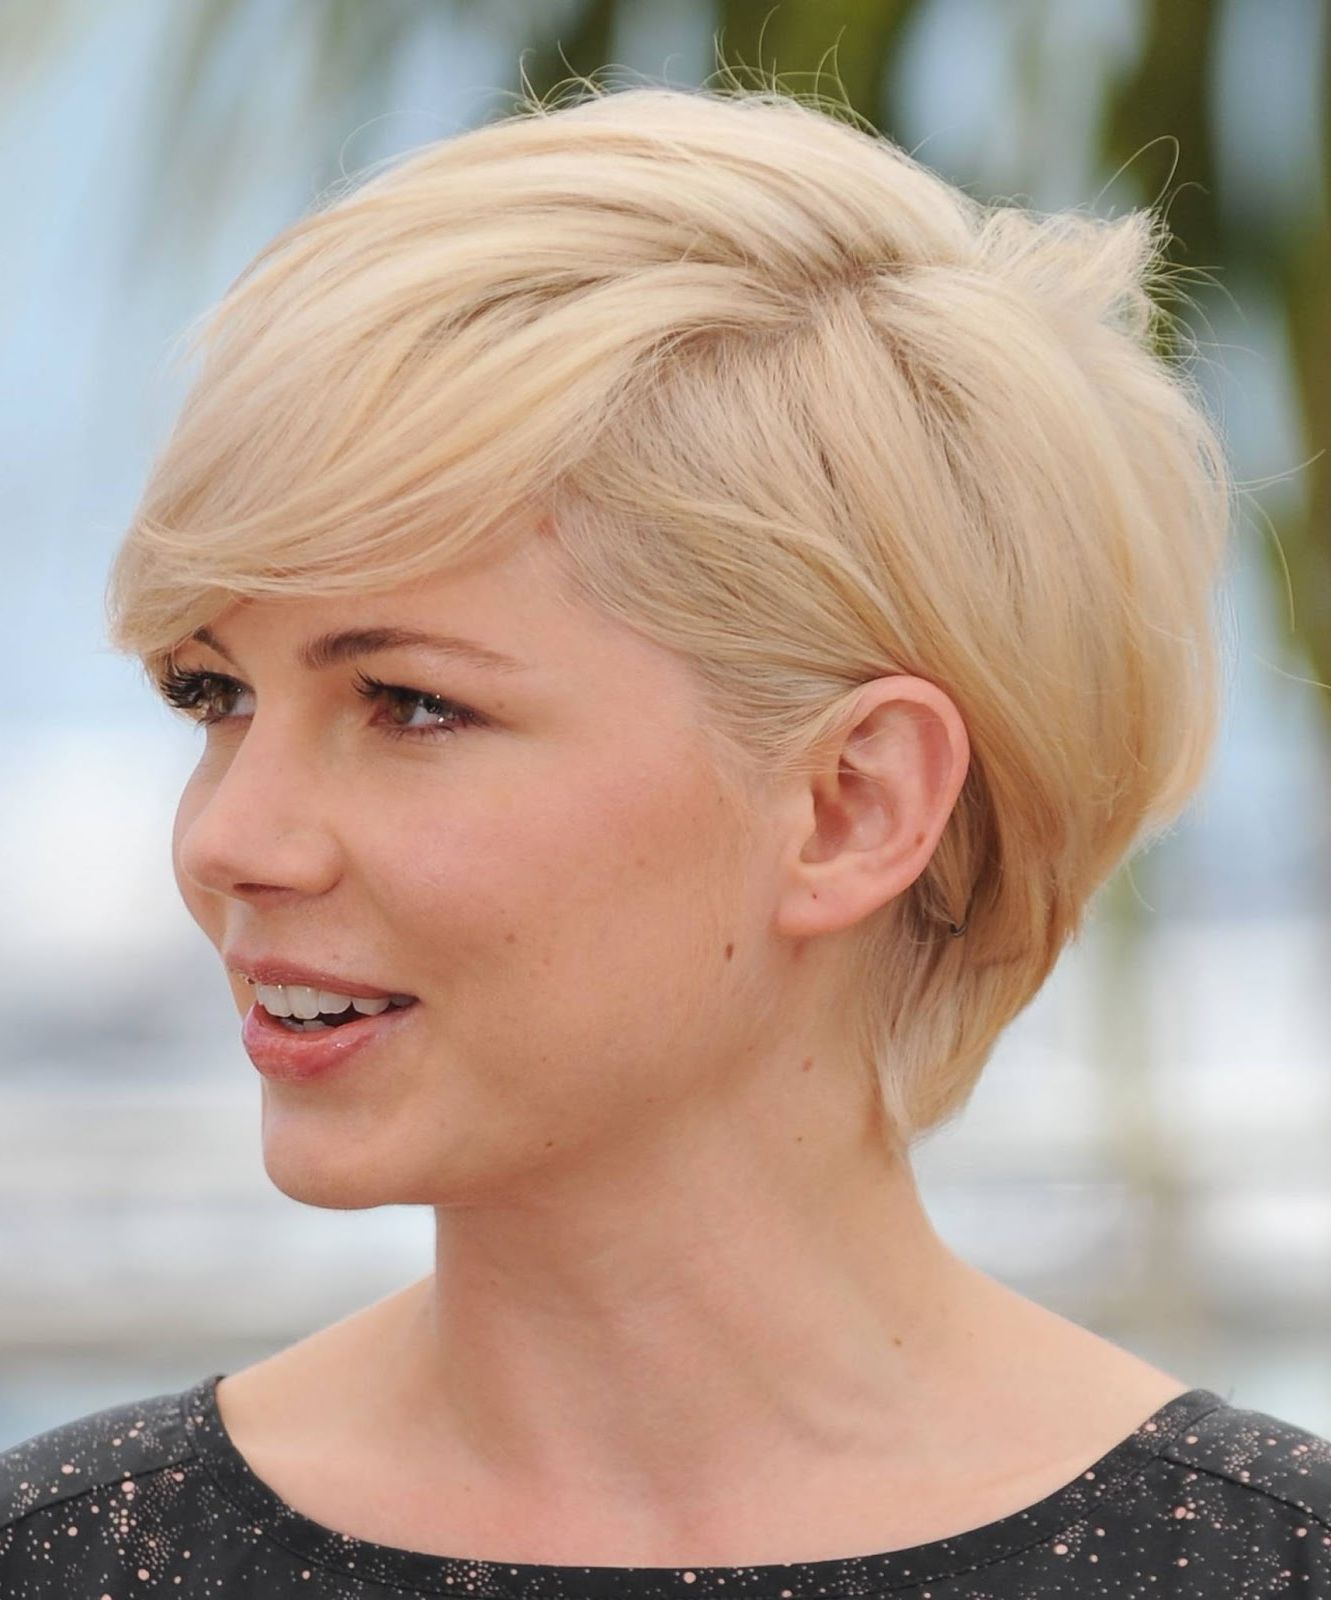 Trendy For Short Hairstyles: Short Blonde Hairstyles Inside Short Hairstyles Covering Ears (View 10 of 25)